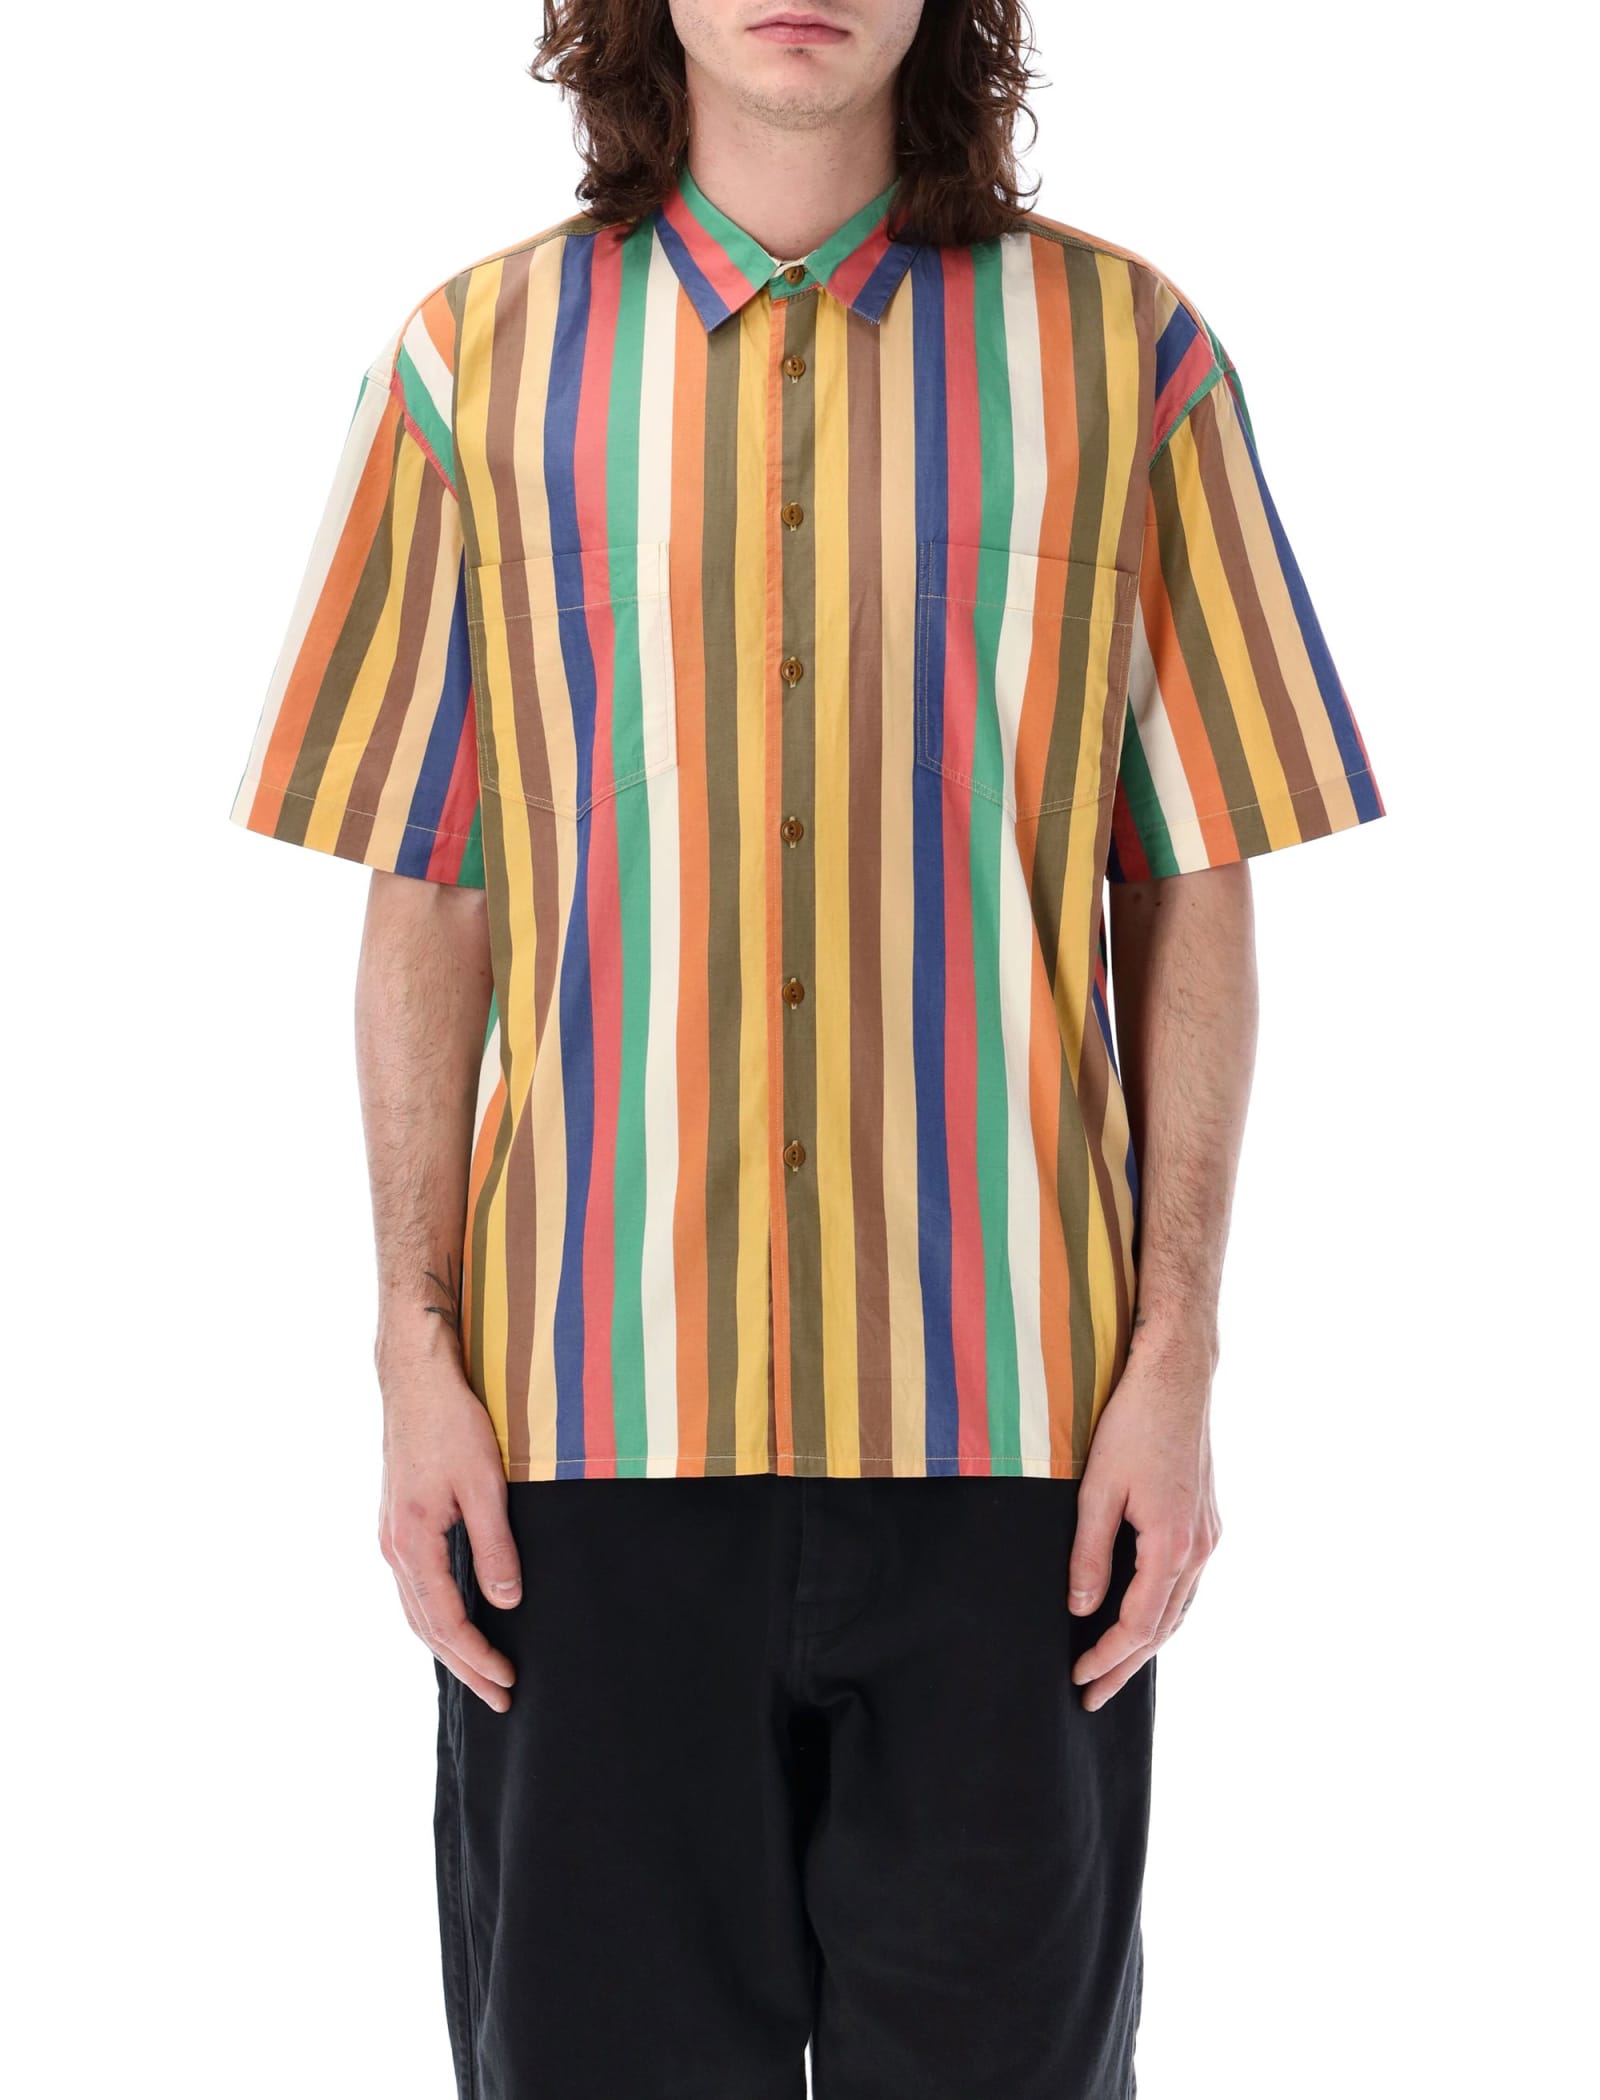 Mitchum Shirt